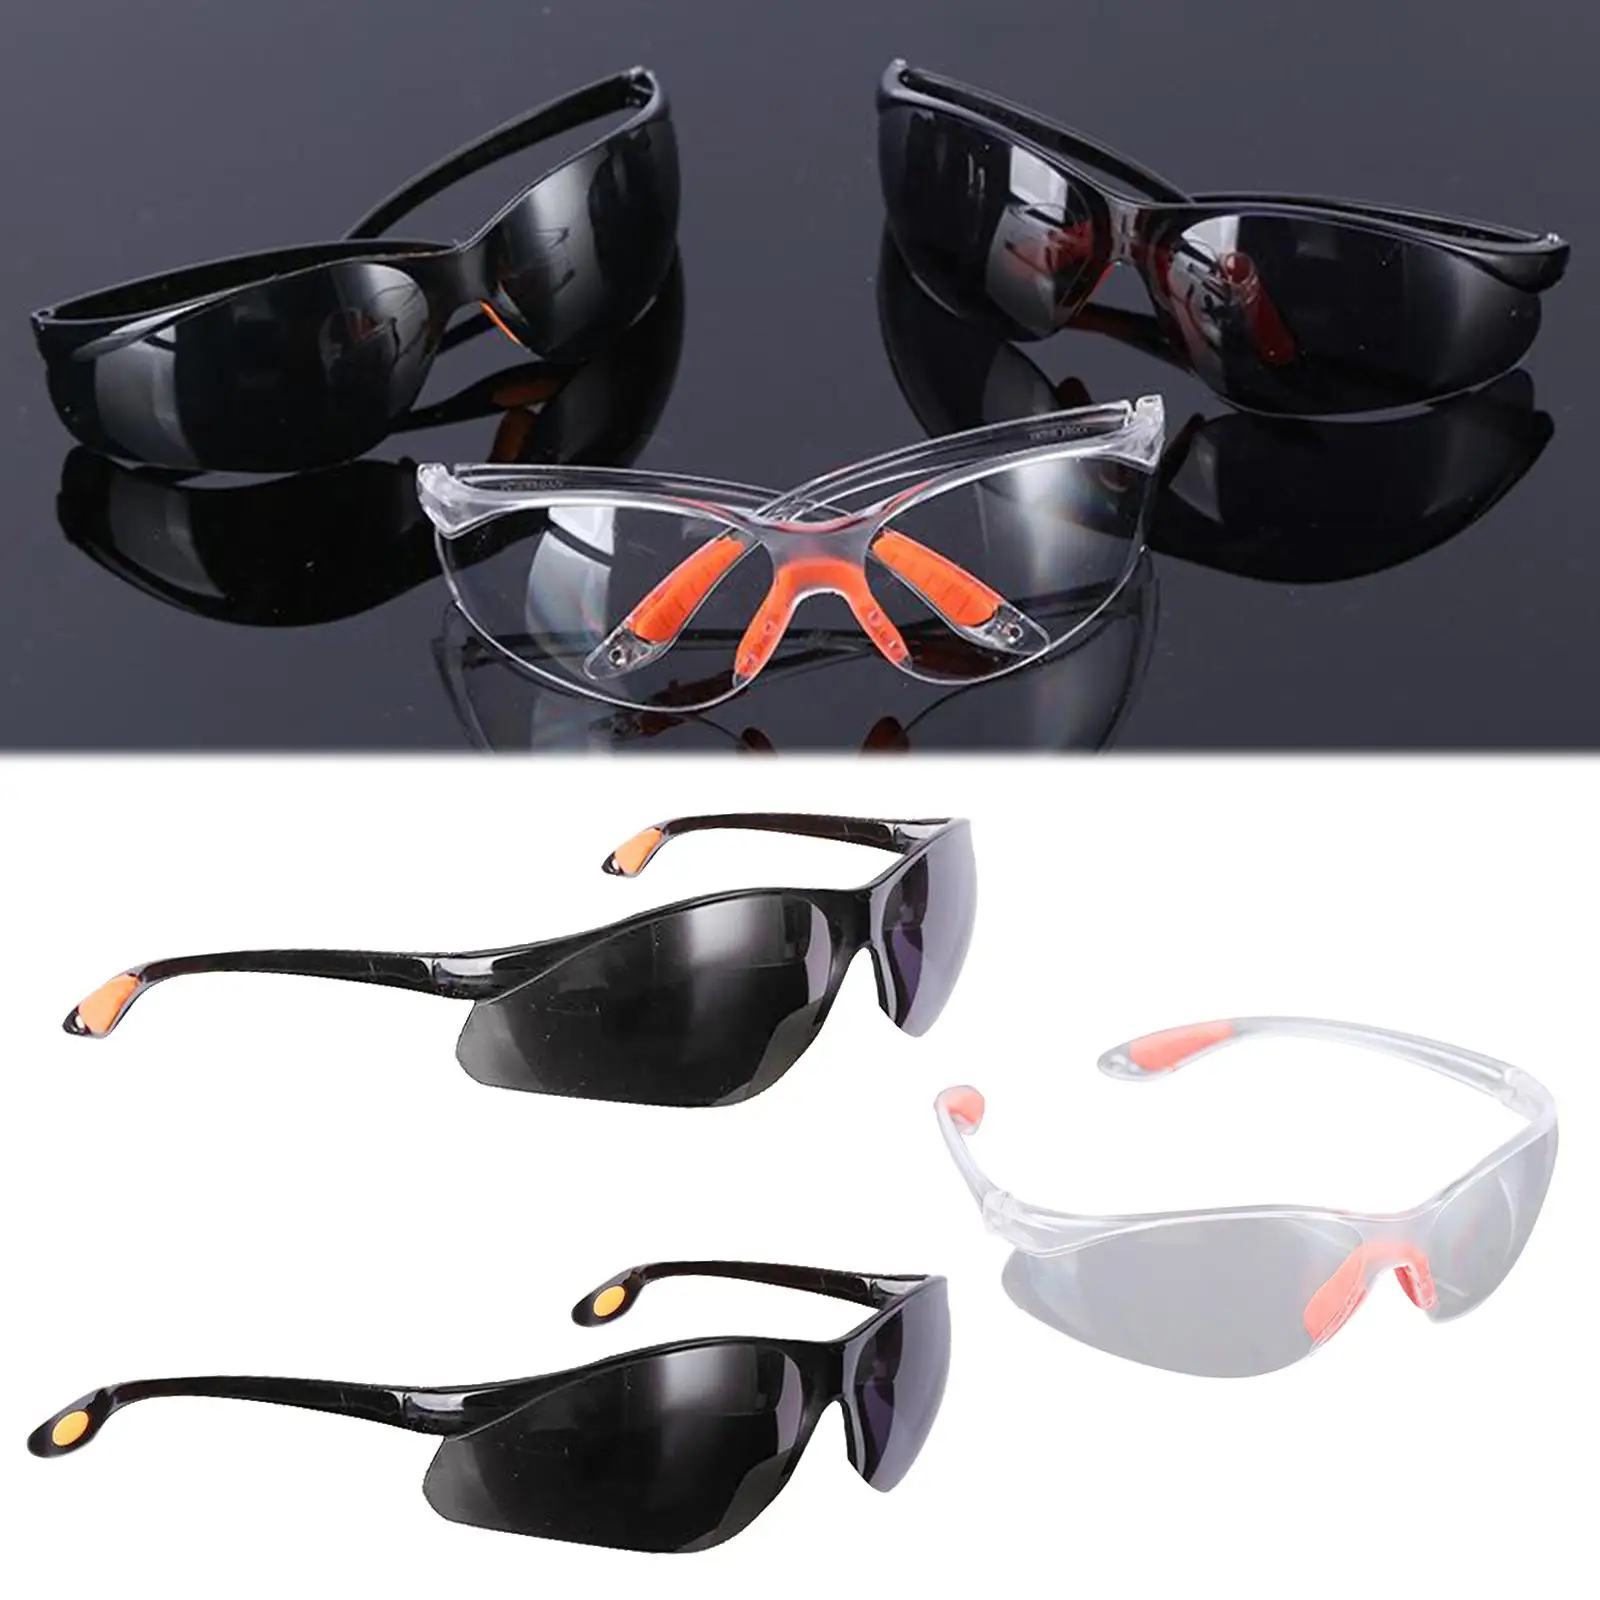 Anti-Fog Protective Safety Goggles   Adjustable   Lightweight Eyewear